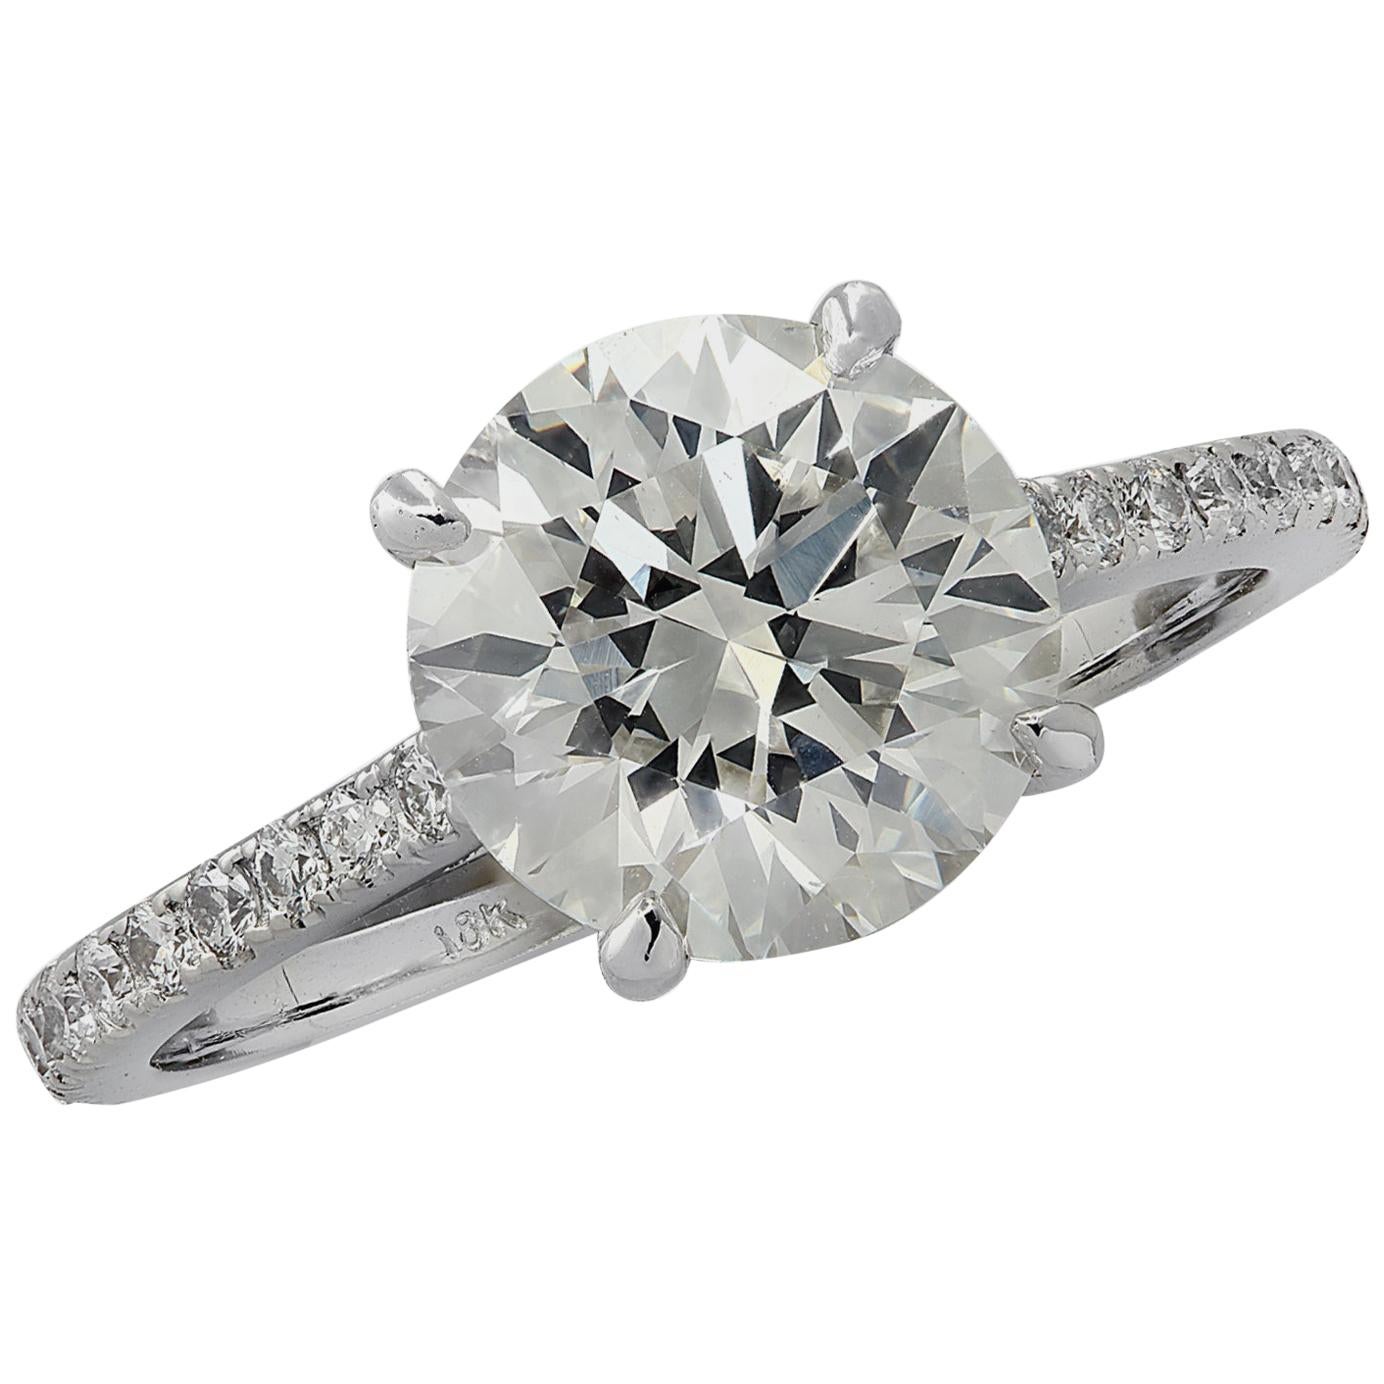 Vivid Diamonds 2.72 Carat Diamond Engagement Ring